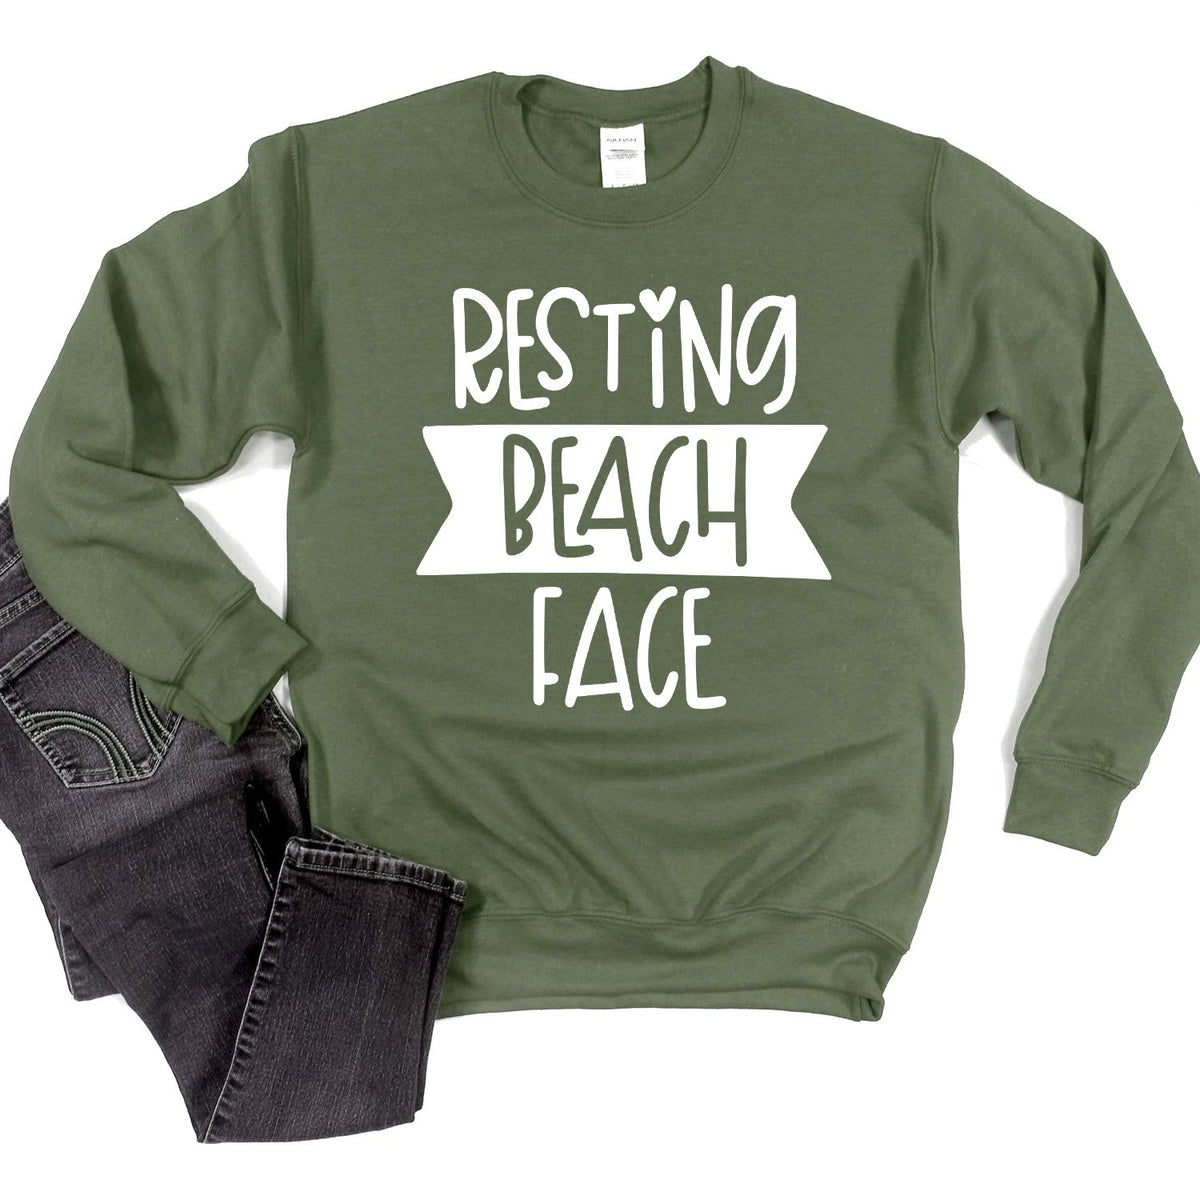 Resting Beach Face - Long Sleeve Heavy Crewneck Sweatshirt